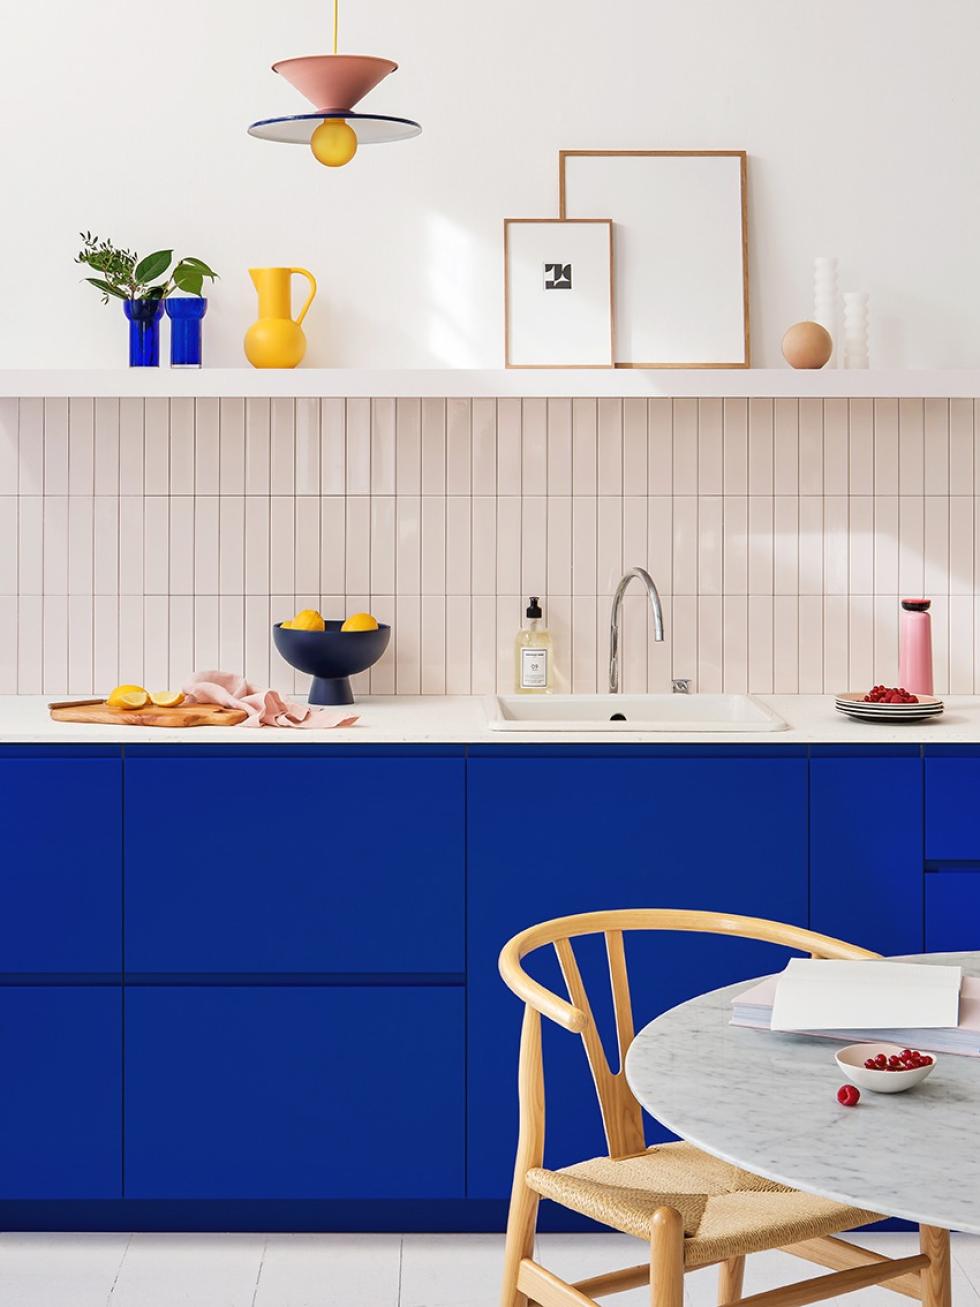 Electric kitchen designed by Plum studio - ⓒ Hervé Goluza for Plum